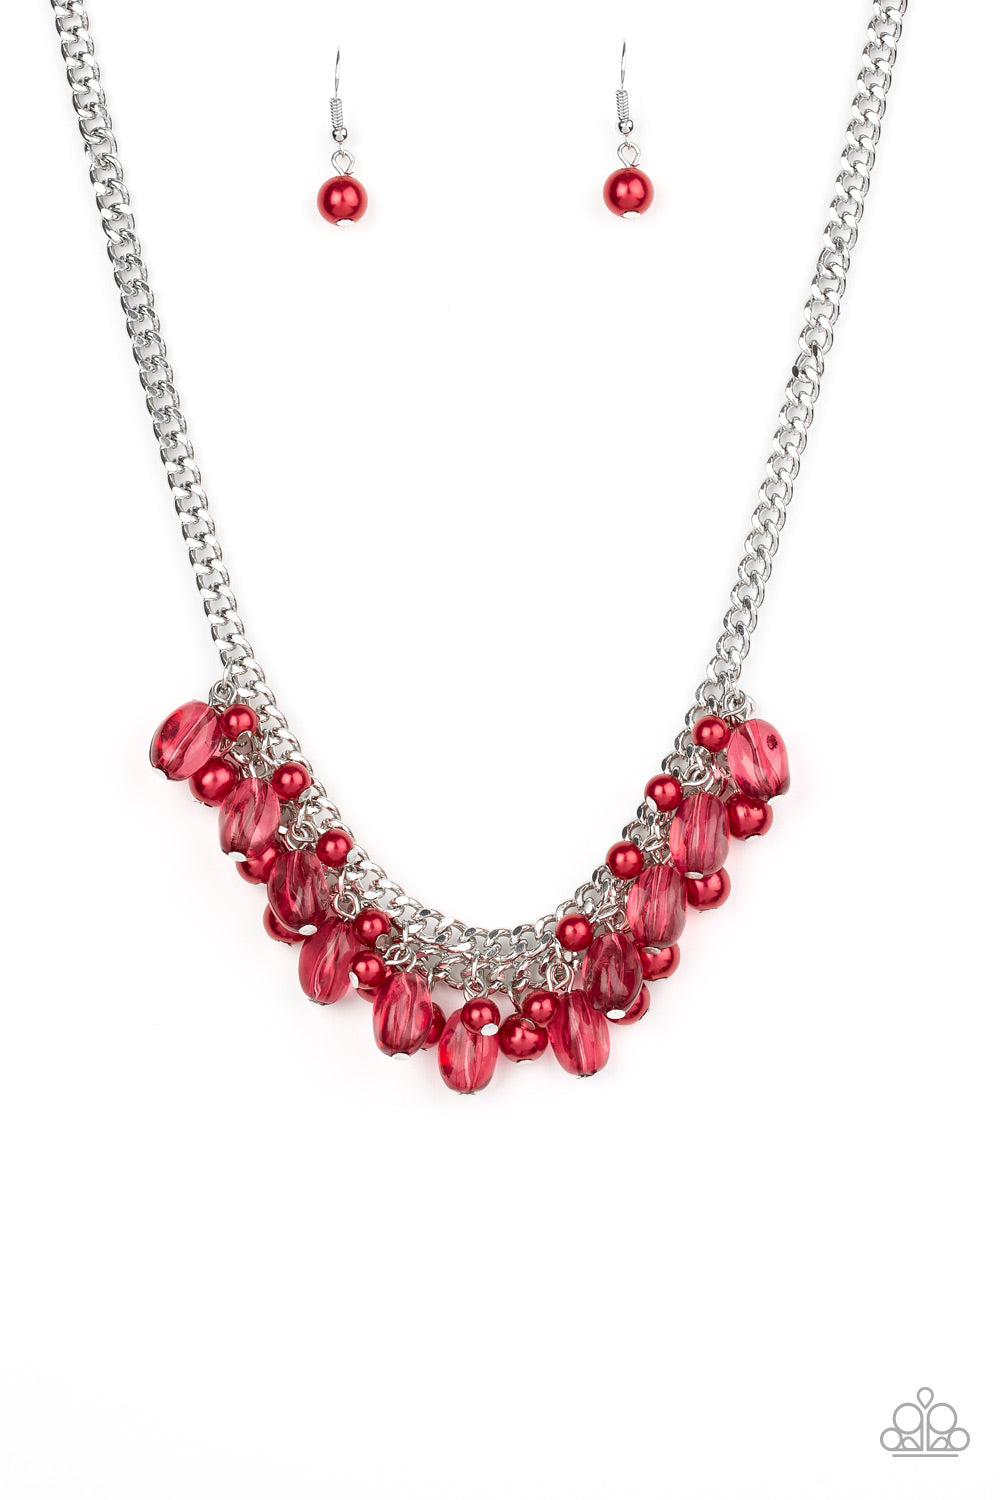 Paparazzi 5th Avenue Flirtation - Red Pearl Necklace - Aliesblingbar